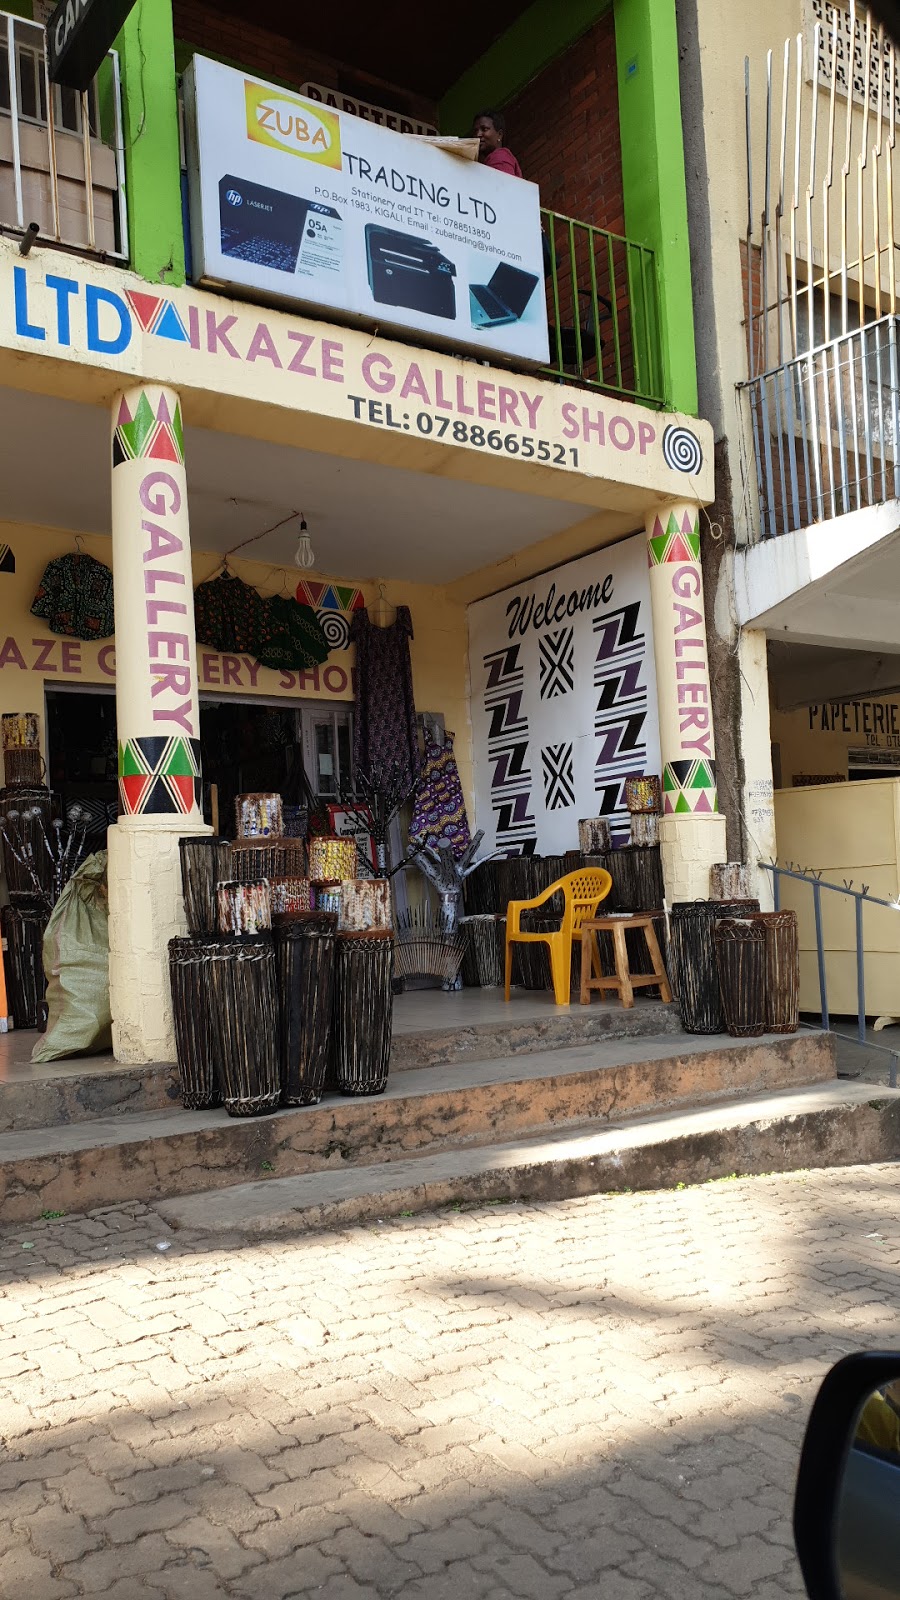 Ikaze Gallery Shop